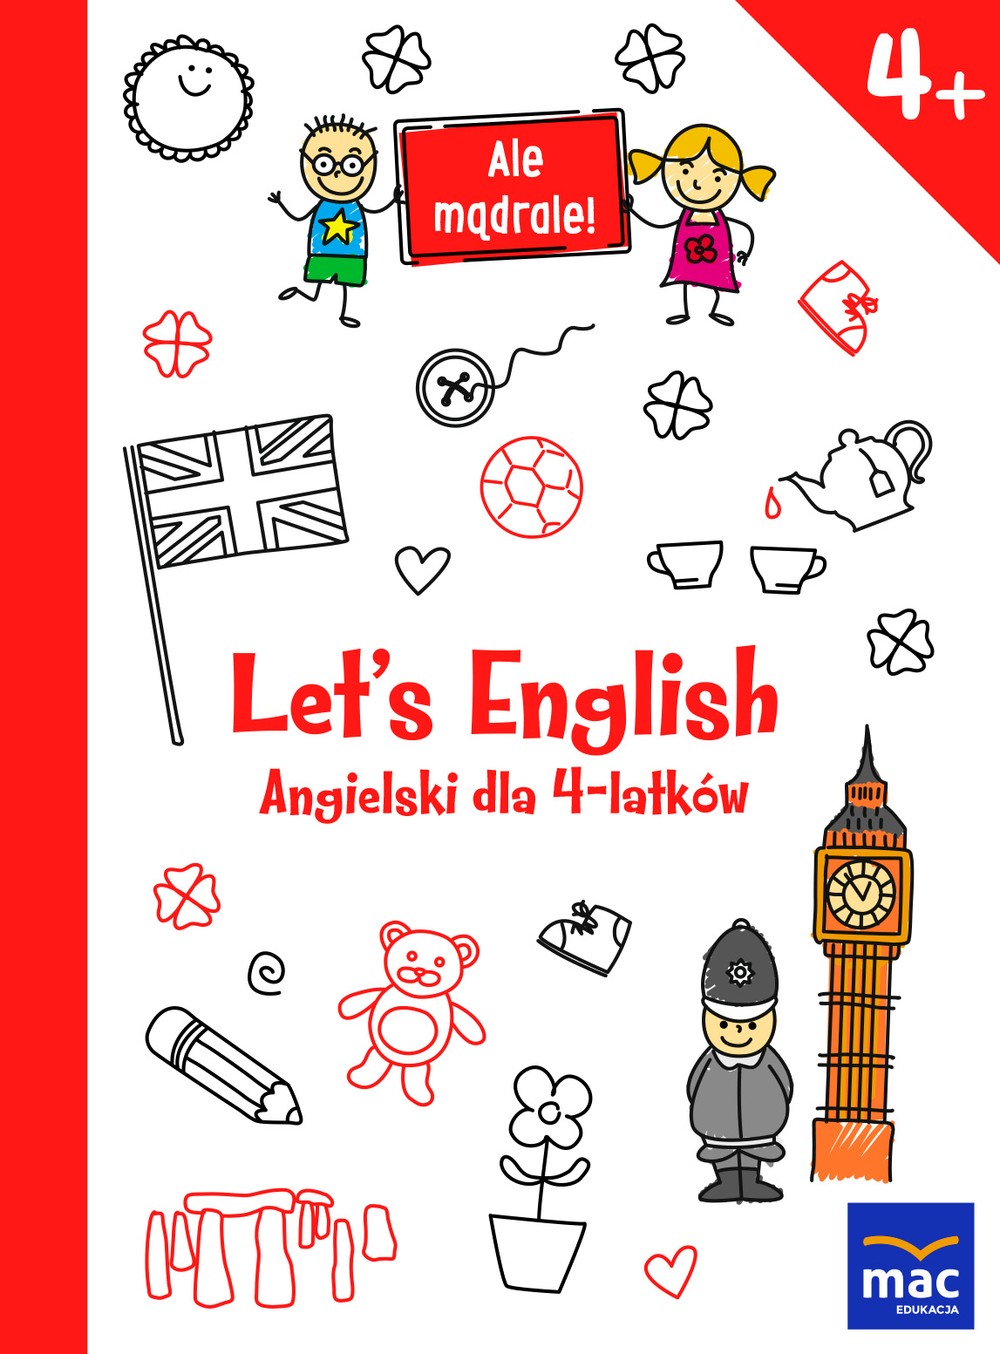 Lets english angielski dla 4-latków ale mądrale